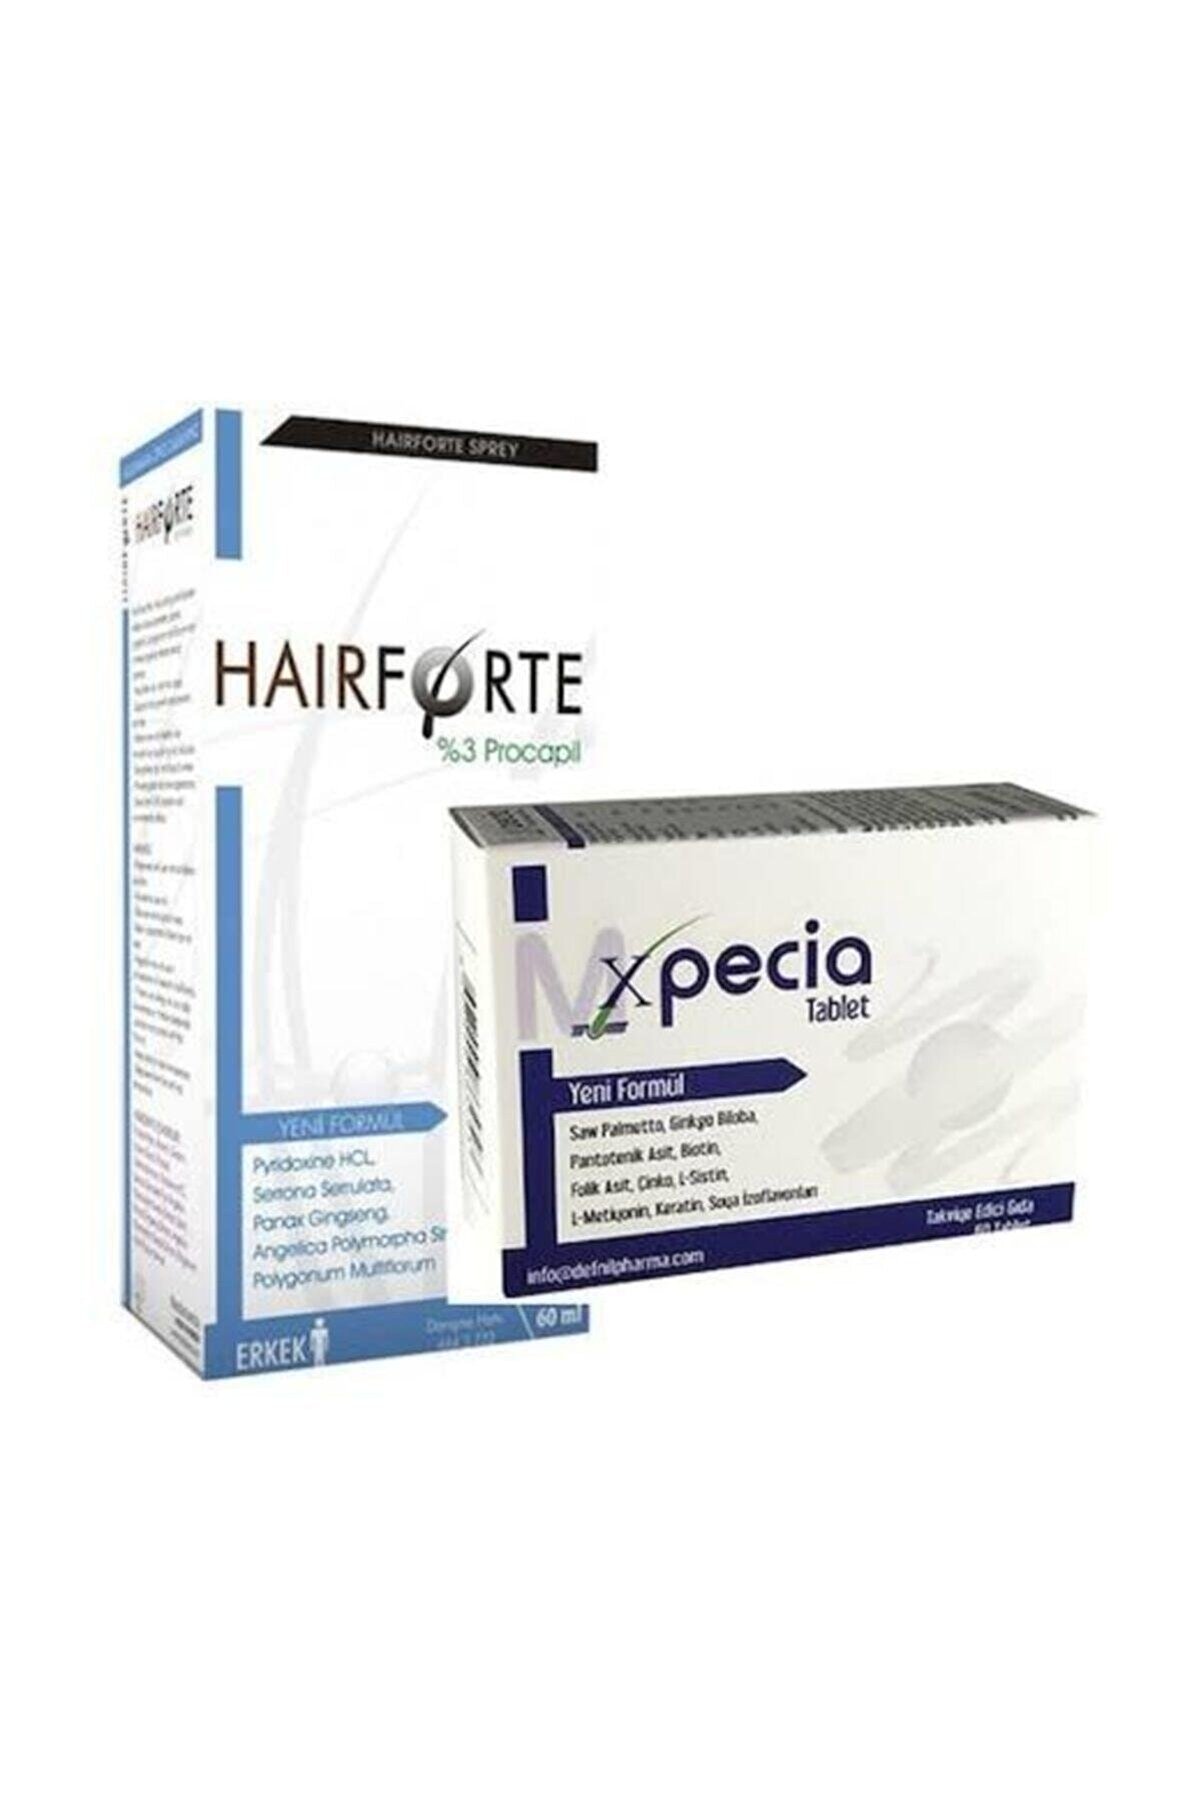 Xpecia Erkek 60 Tablet  Hairforte Erkek Sprey